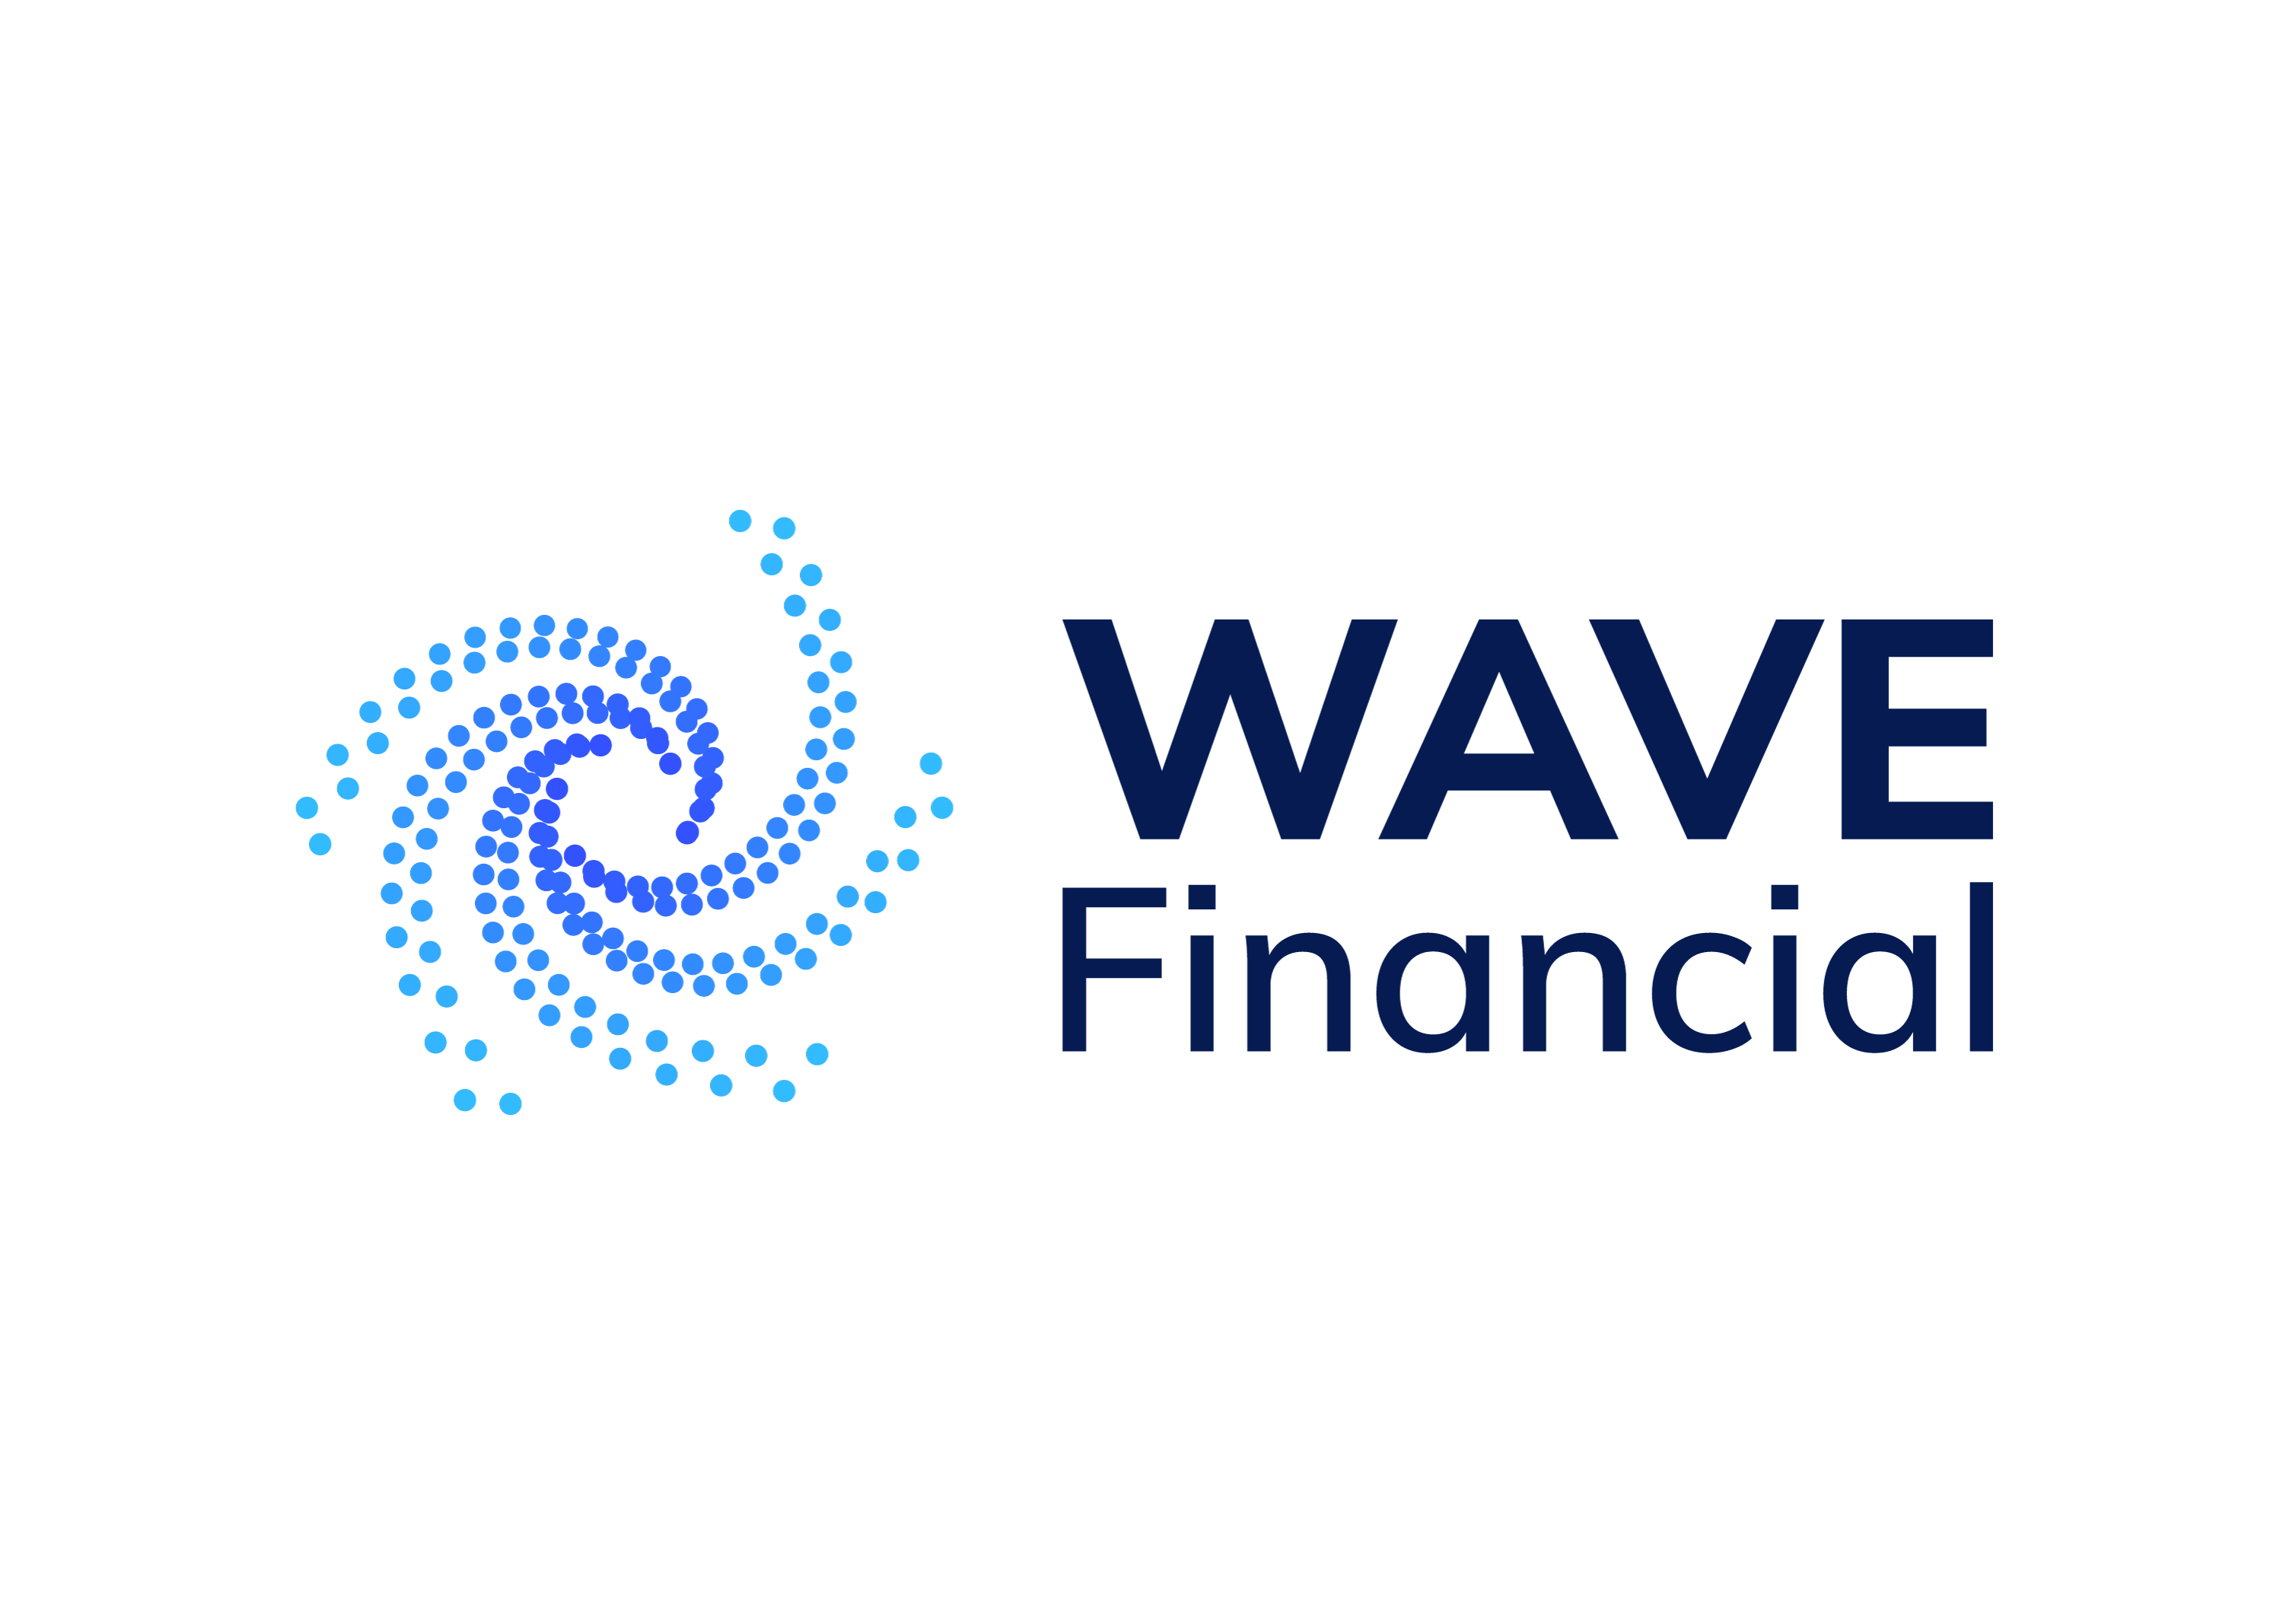 WAVE Financial